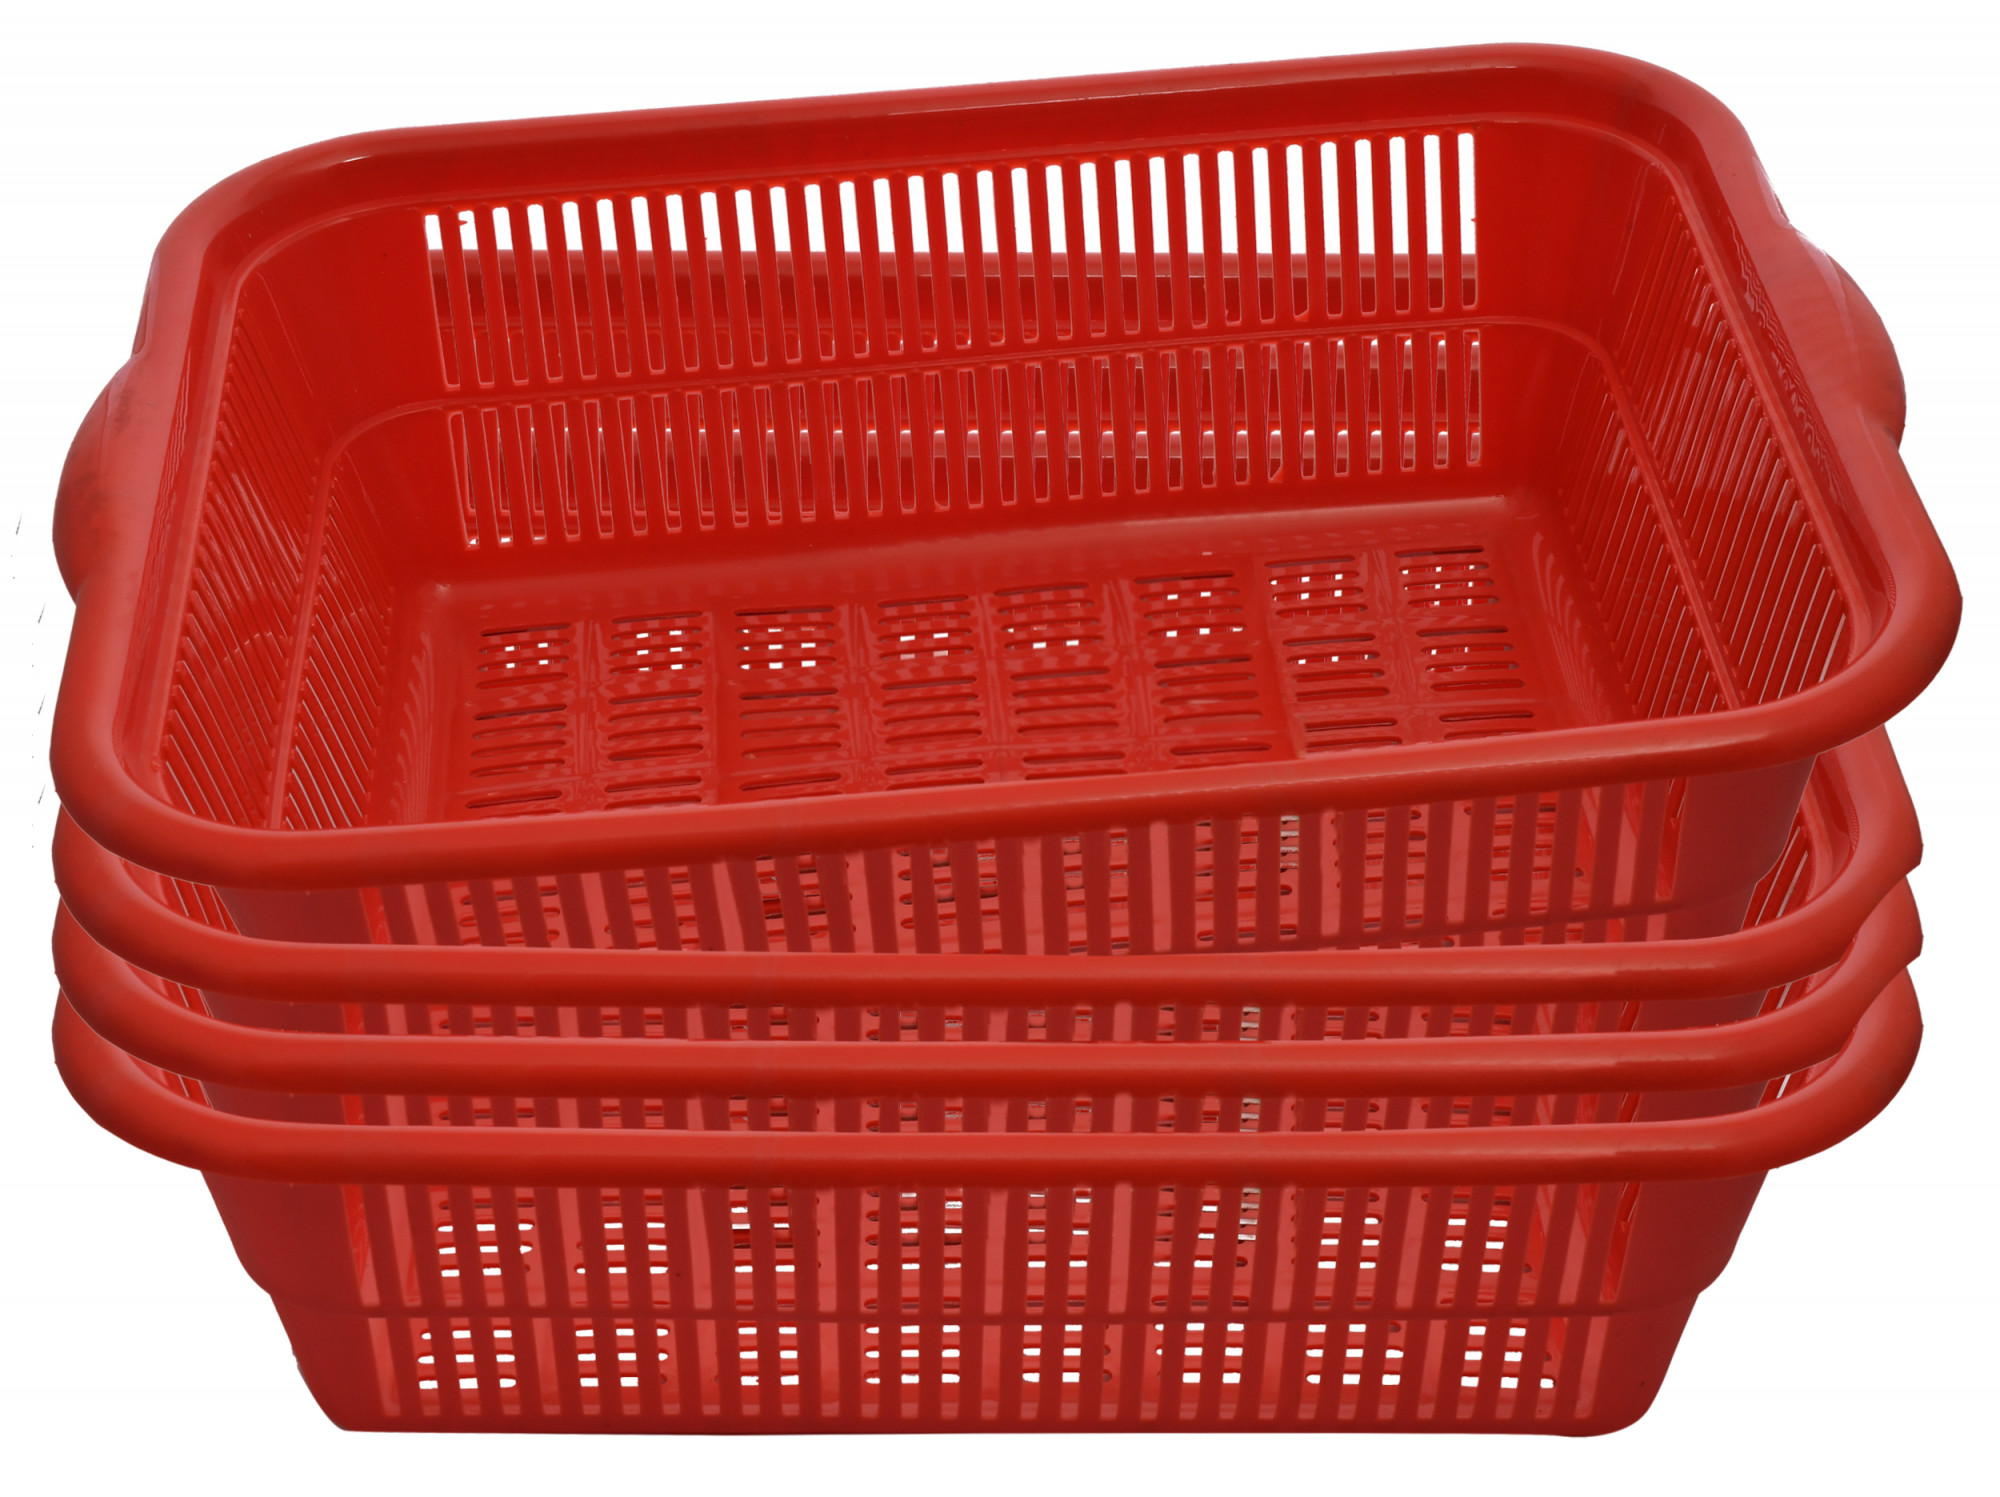 Kuber Industries Plastic Kitchen Medium Size Dish Rack Drainer Vegetables And Fruits Washing Basket Dish Rack Multipurpose Organizers (Red)-KUBMART680